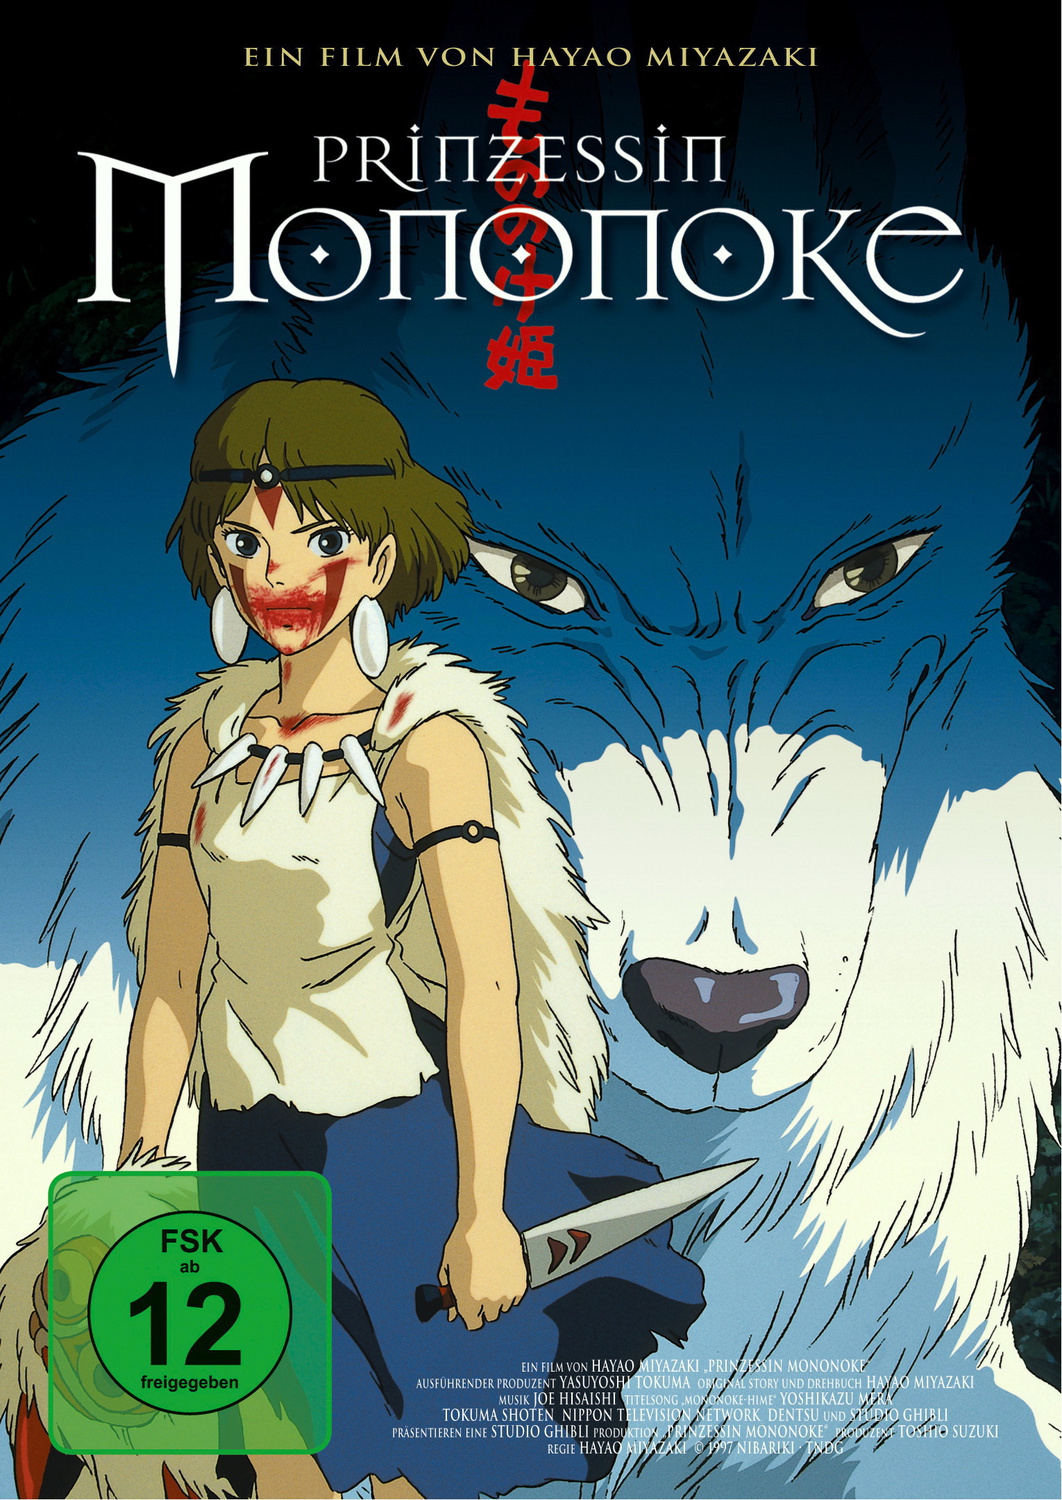 Hayao Miyazaki Filme Deutsch